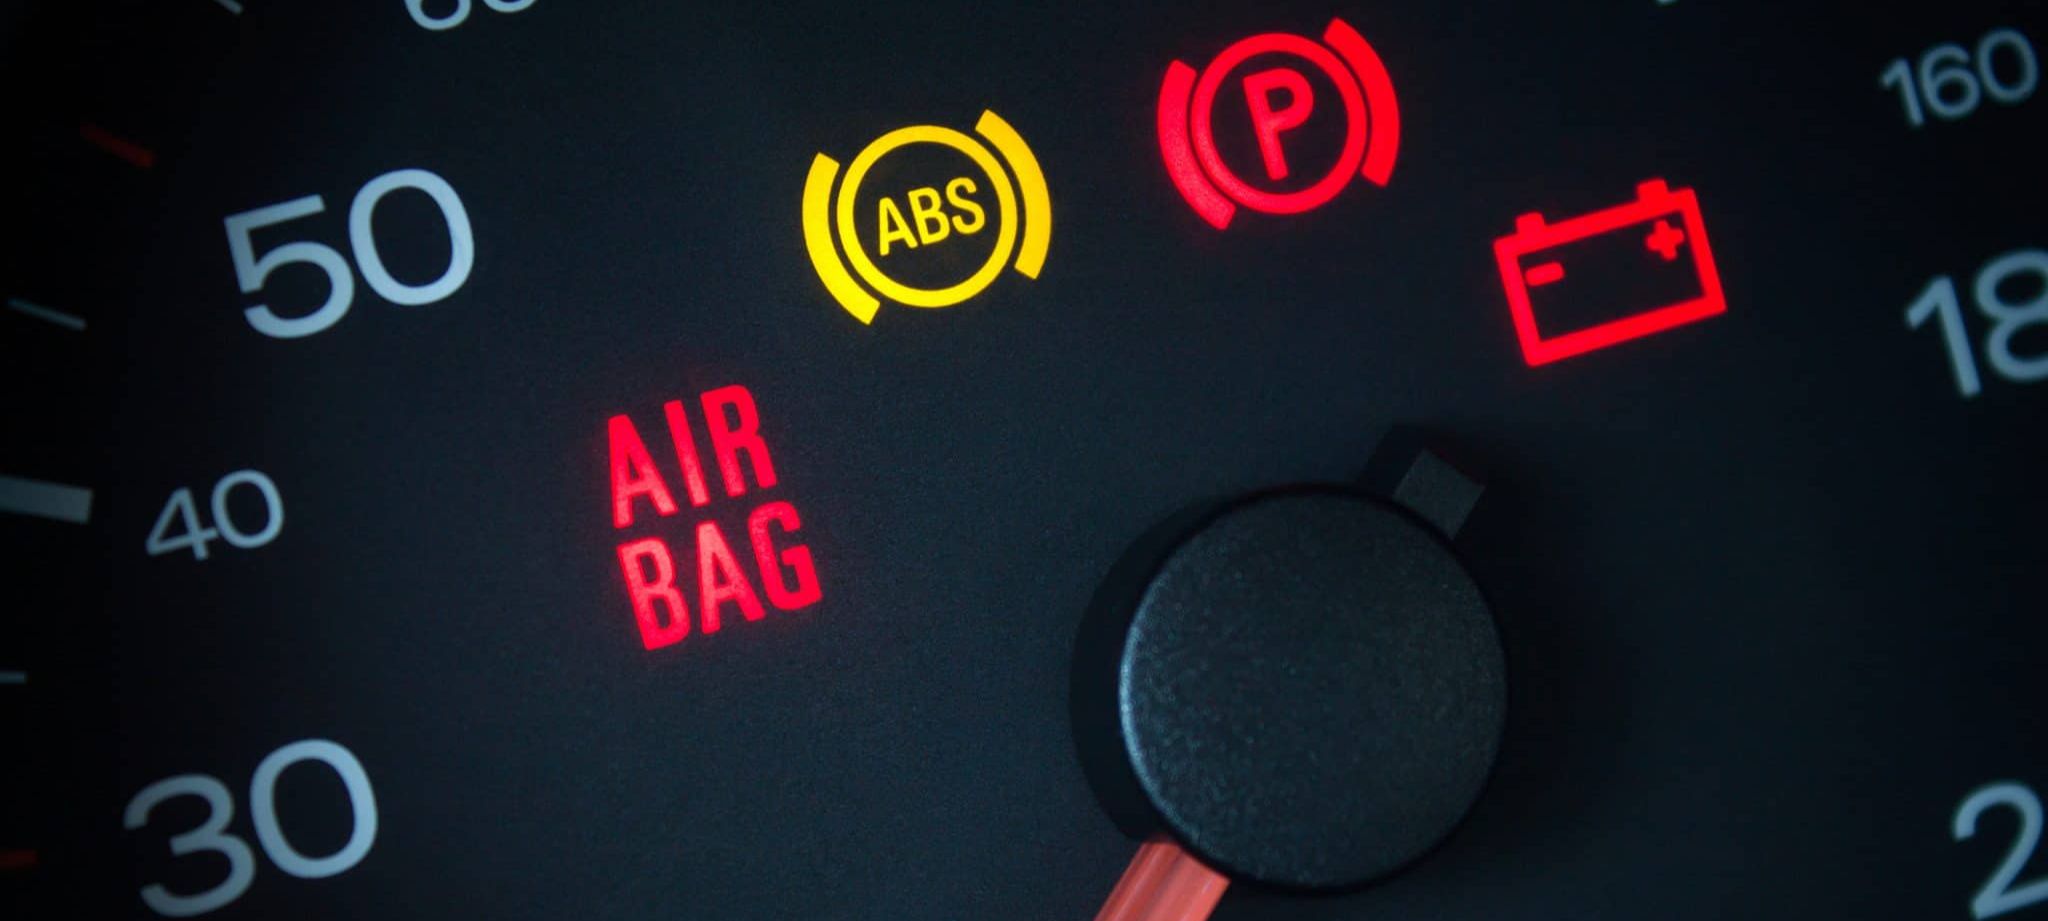 TUTO comment réparer le voyant Airbag (how repair Airbag lightning) 